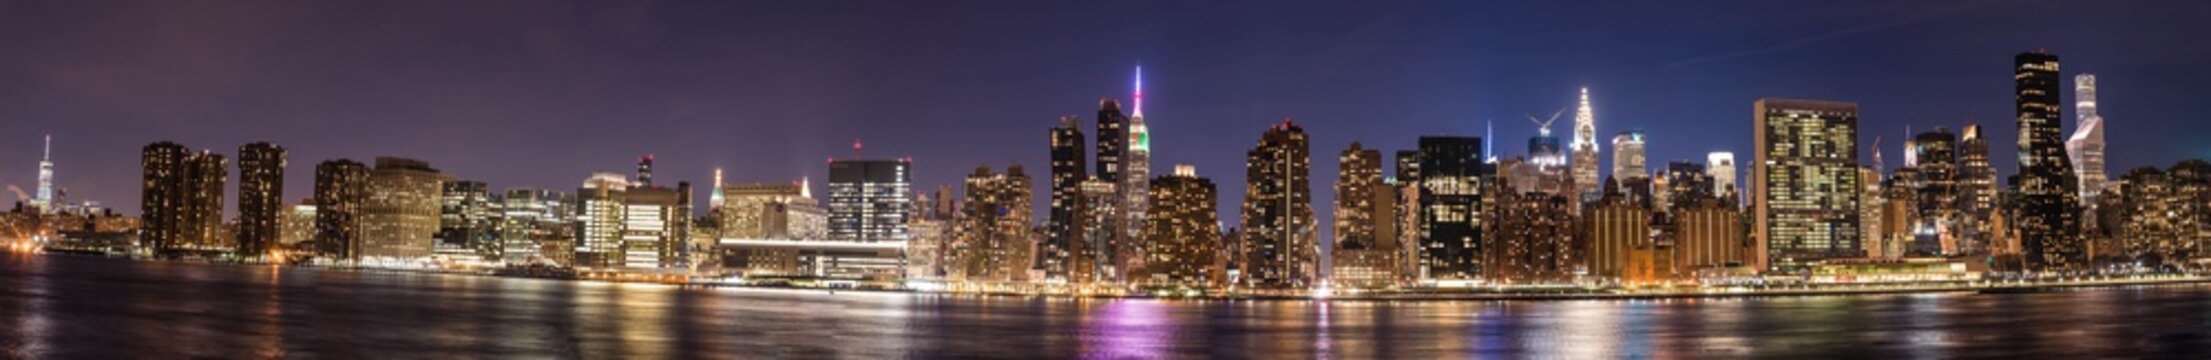 A beautiful night pano Image of New York City